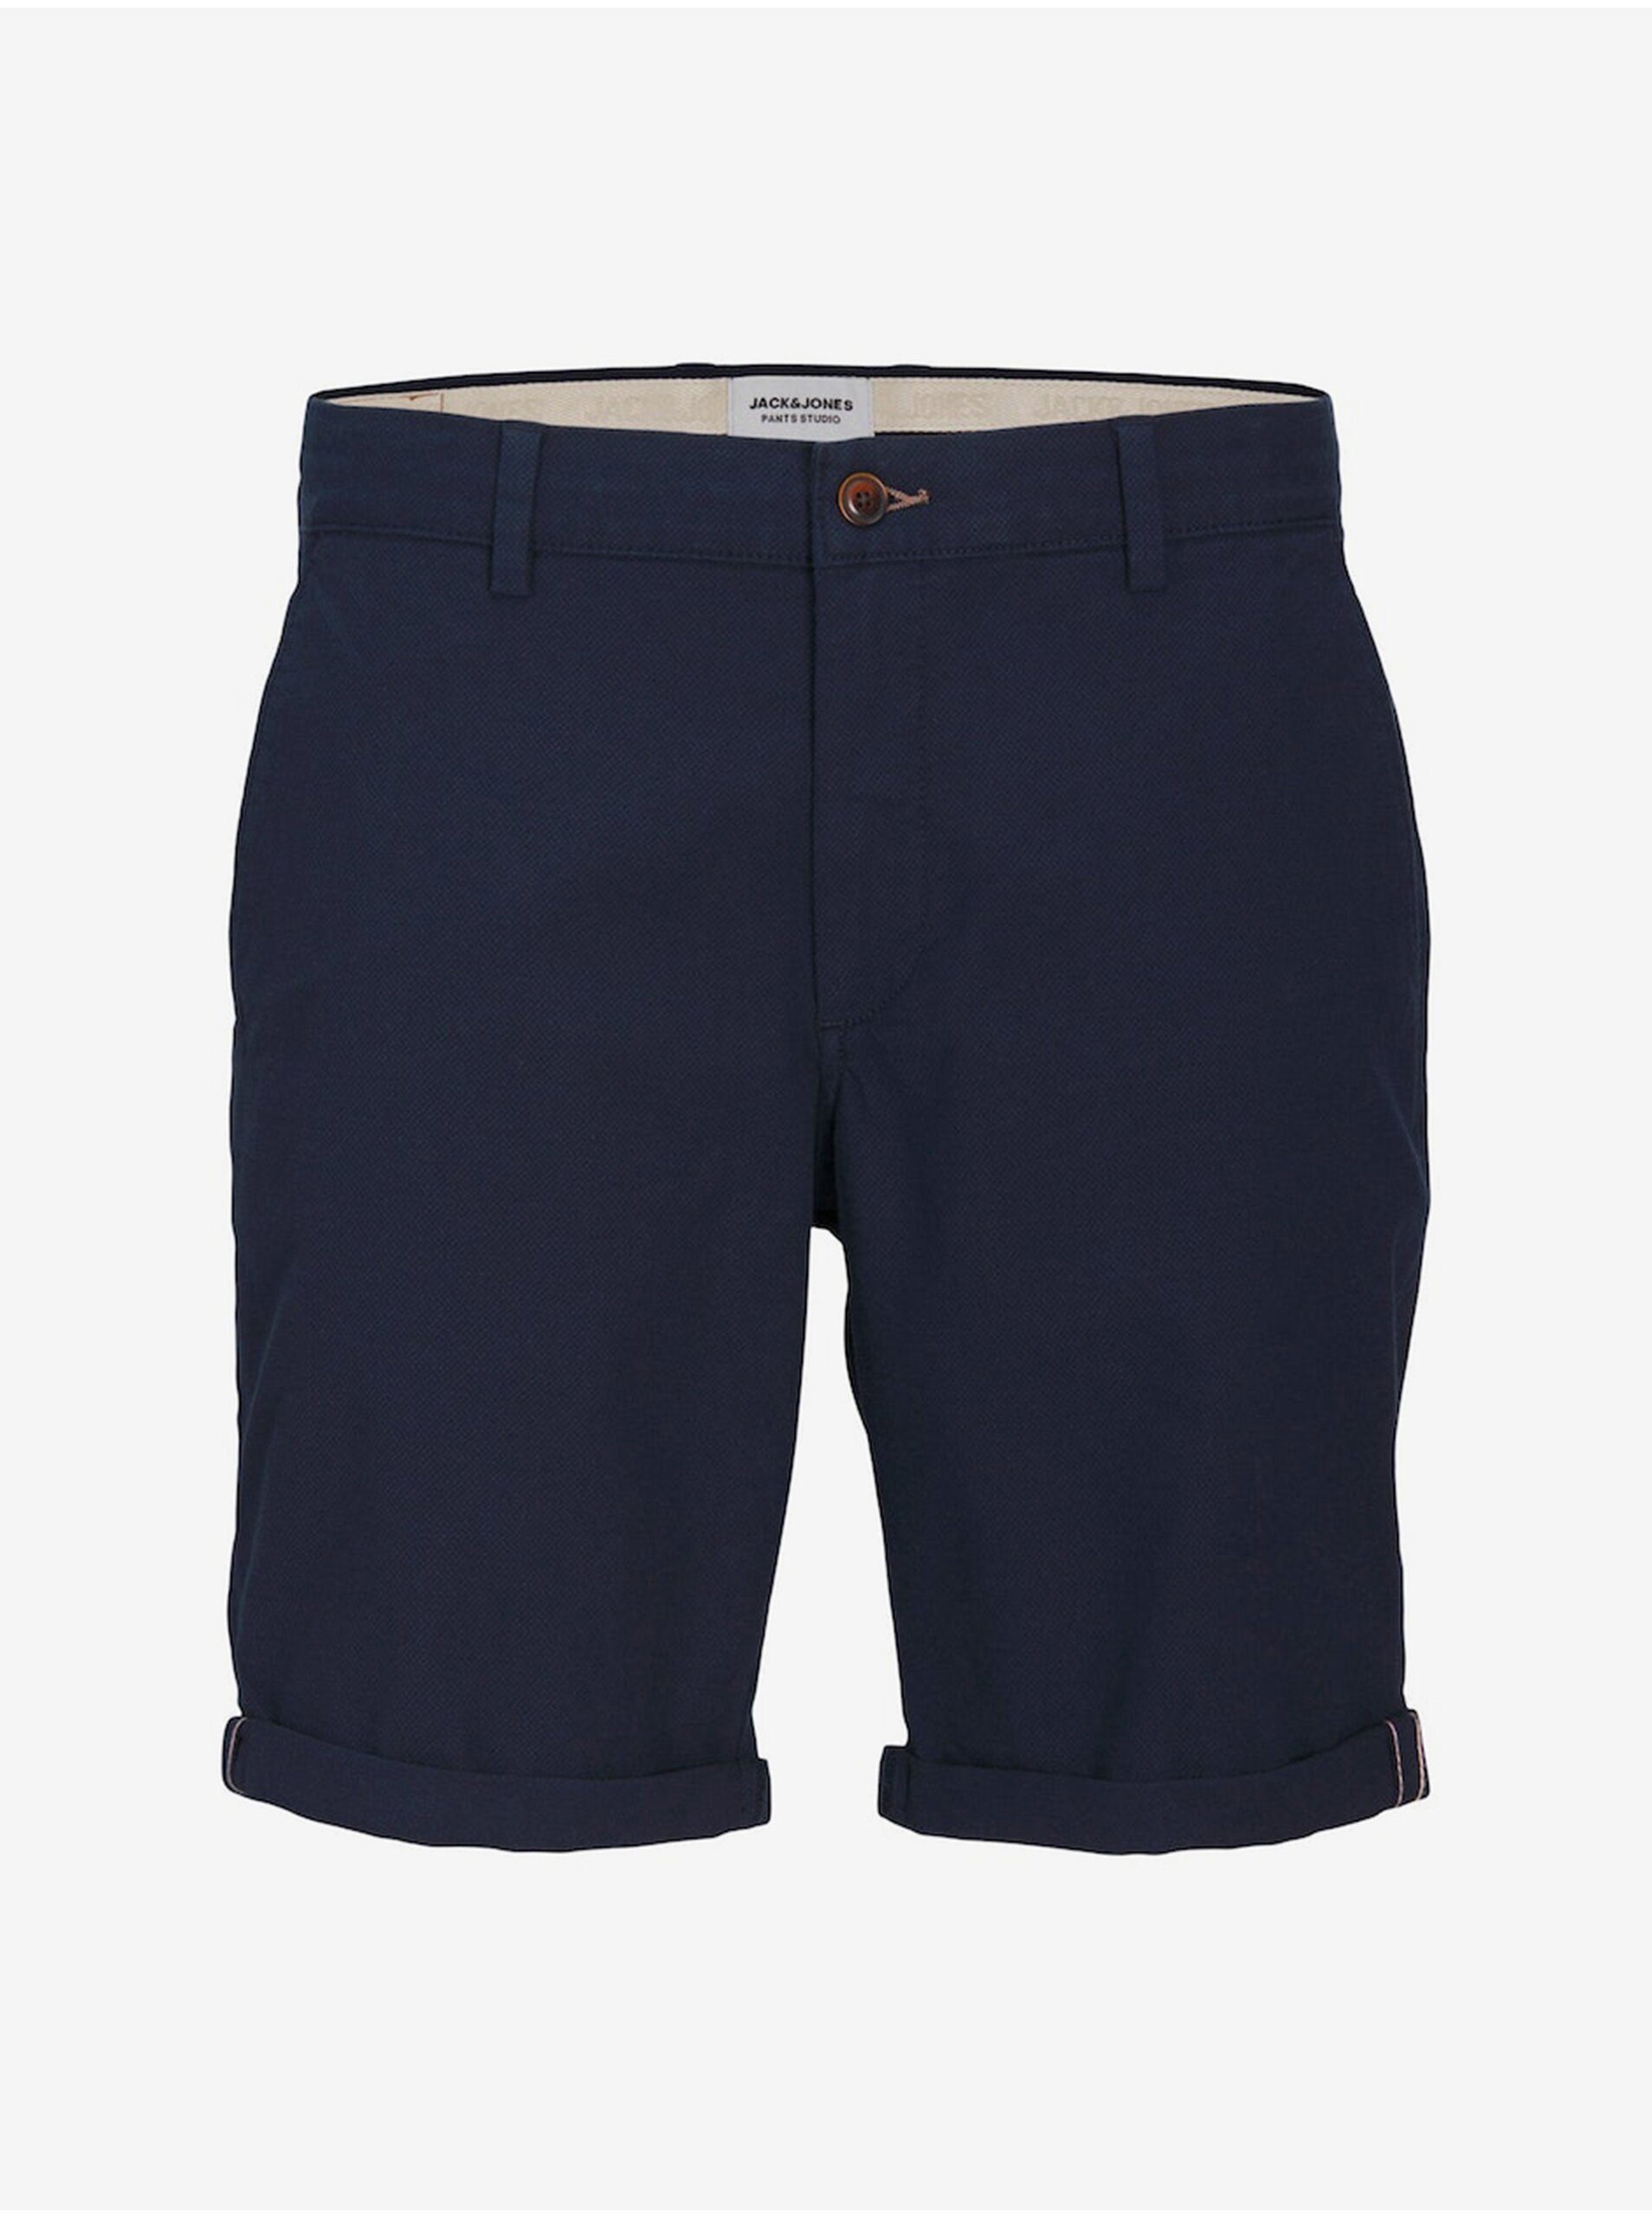 Jack & Jones Fury Men's Dark Blue Chino Shorts - Men's